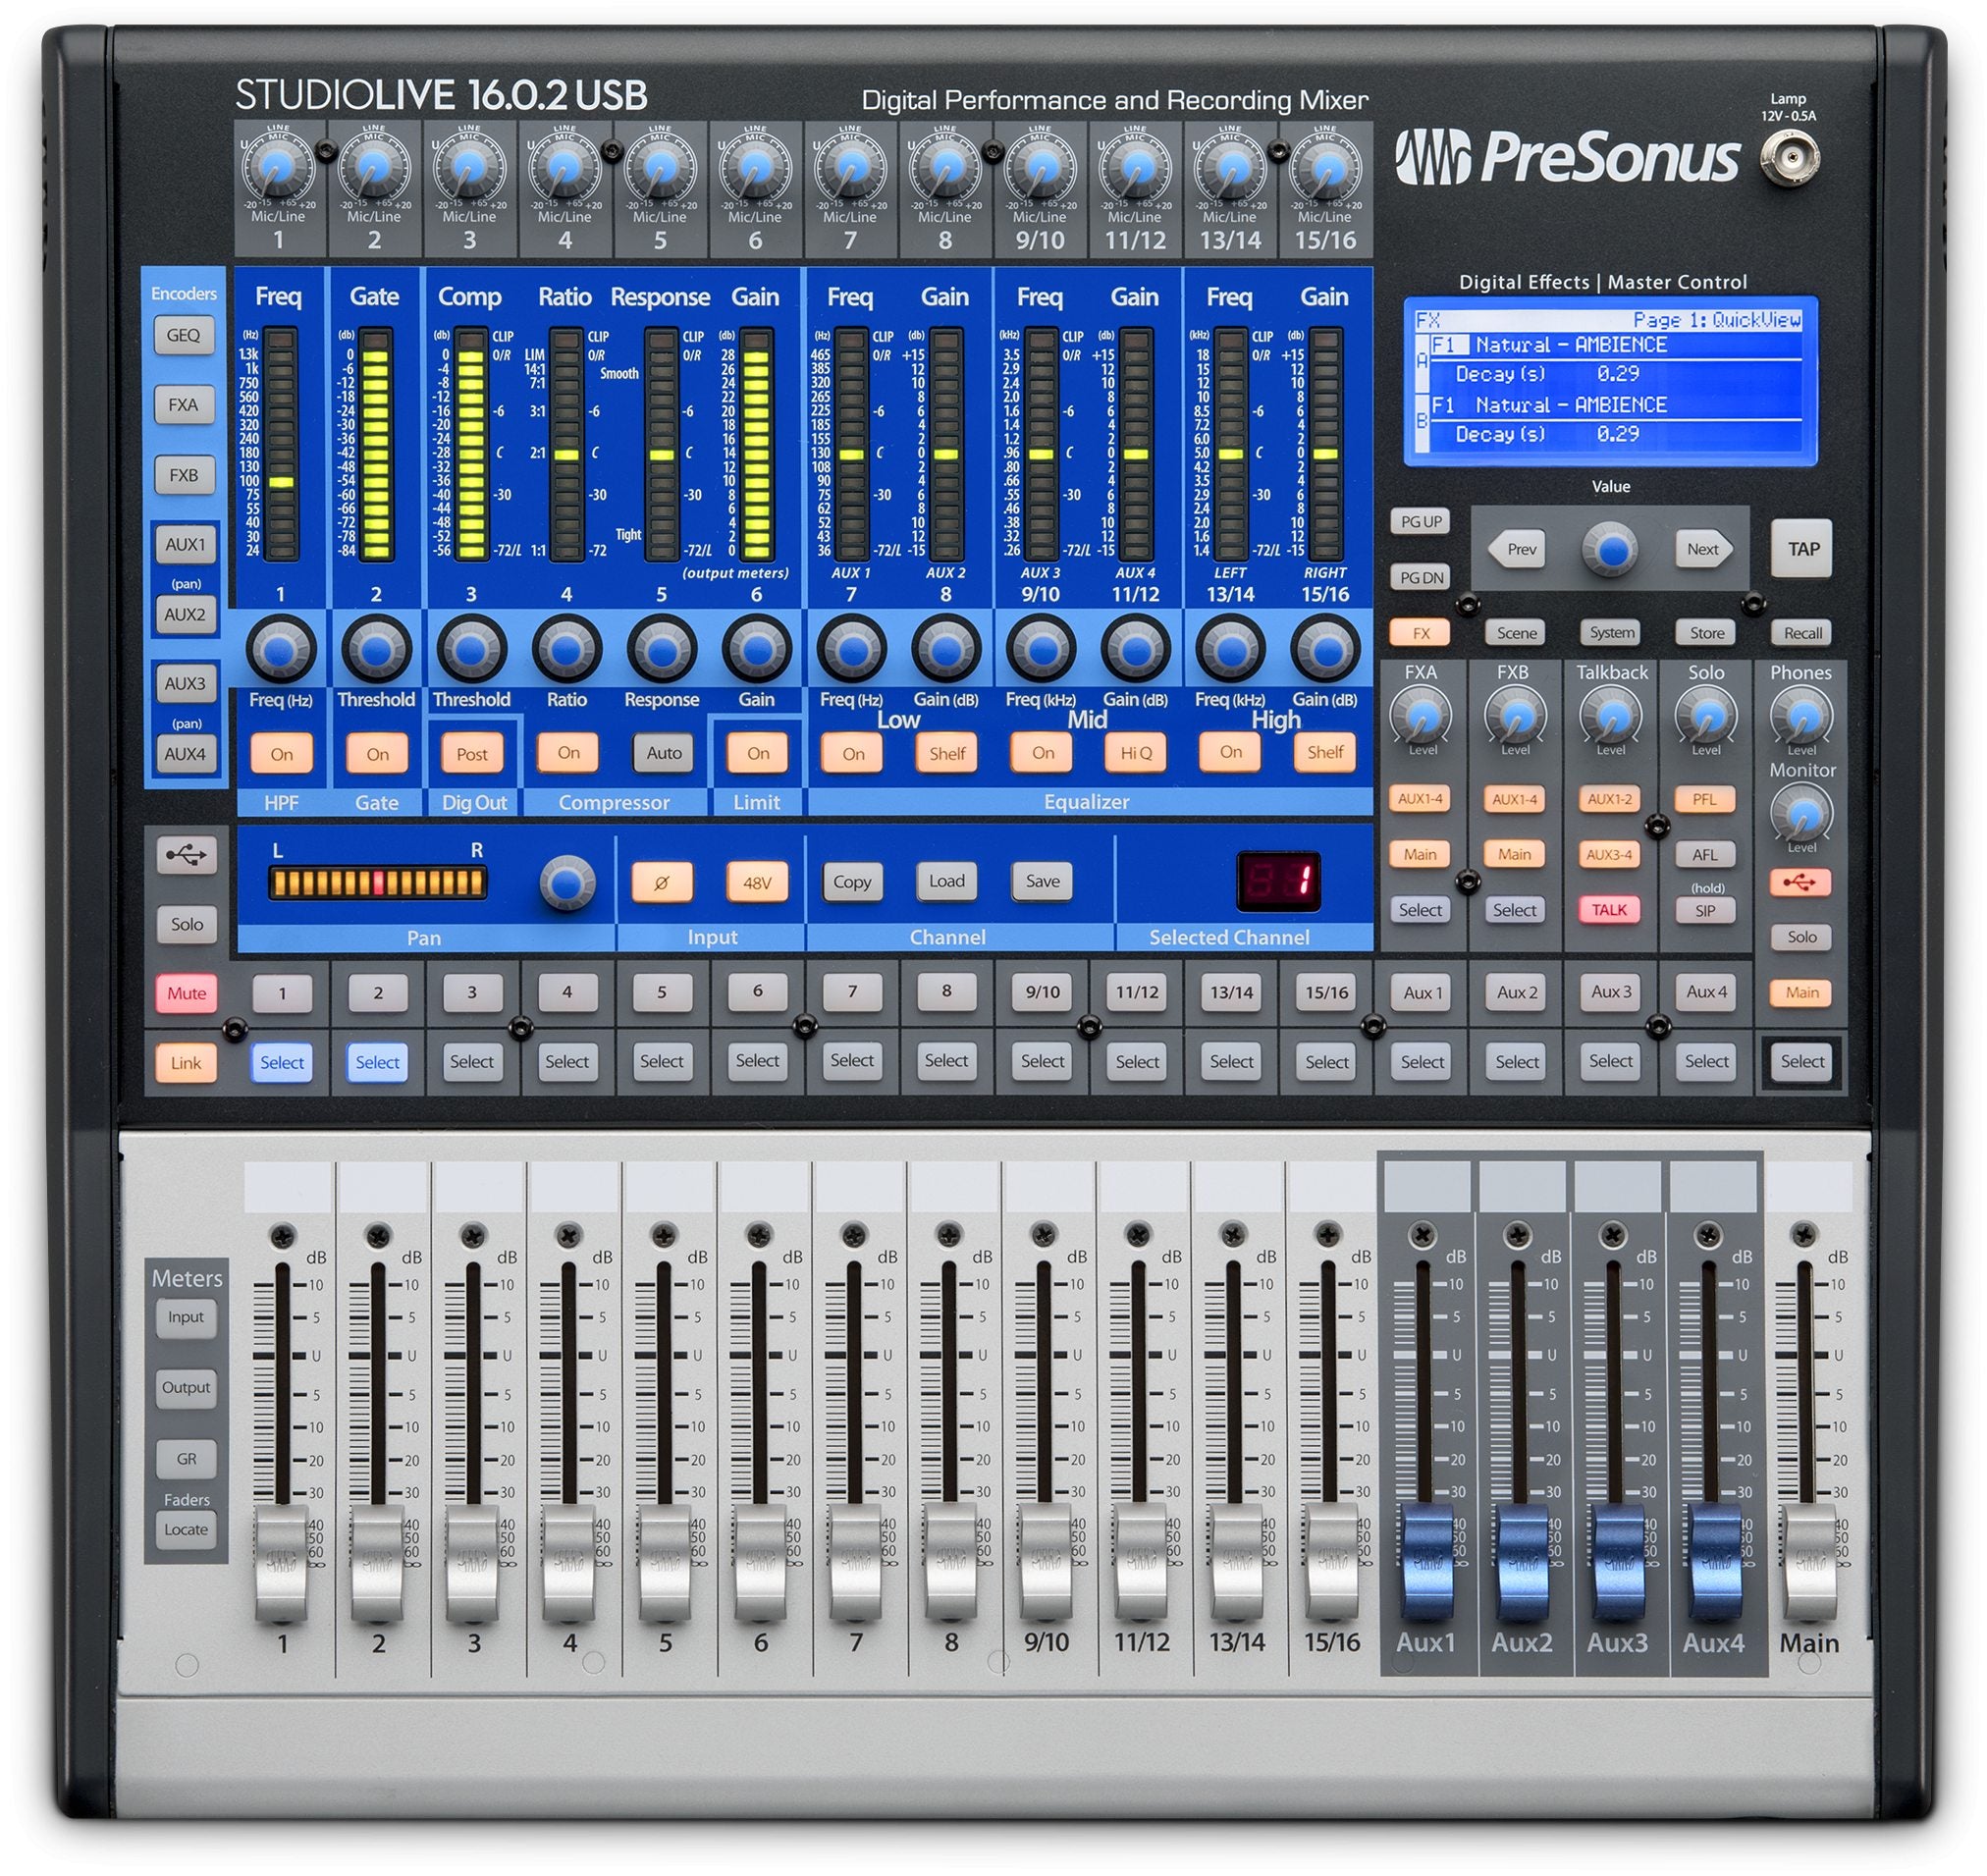 Presonus StudioLive 16.0.2 USB: 16x2 Performance and Recording